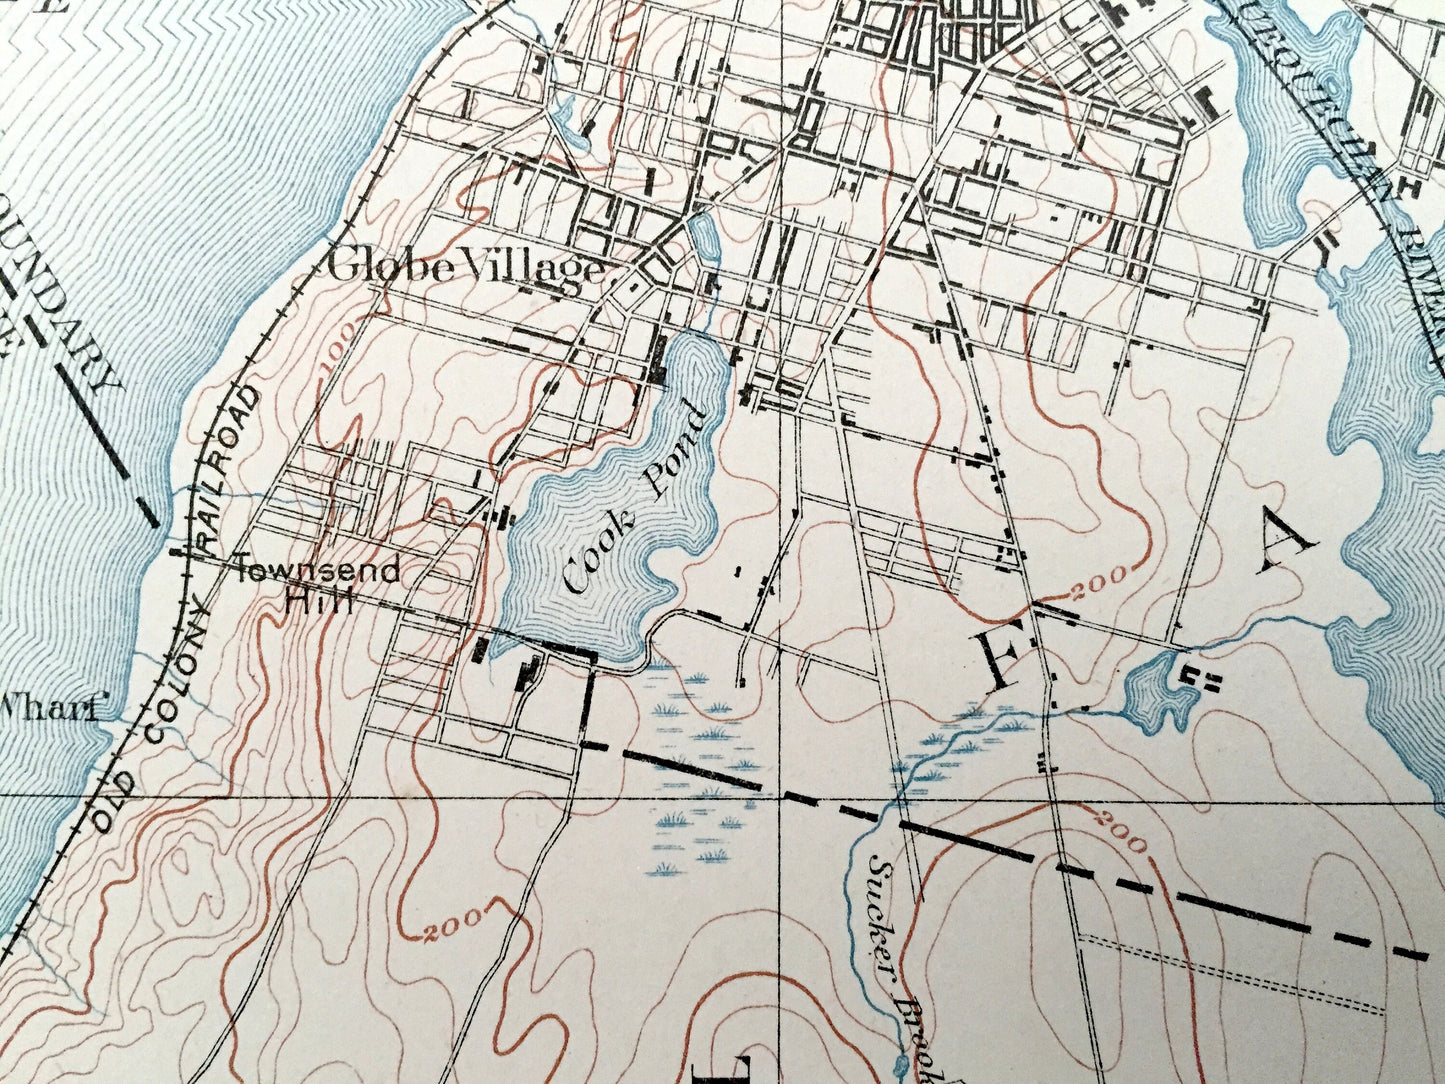 Antique 1885 Fall River, Massachusetts US Geological Survey Topographic Map – Sakonnet River, Swansea, Westport & Tiverton, Rhode Island, MA